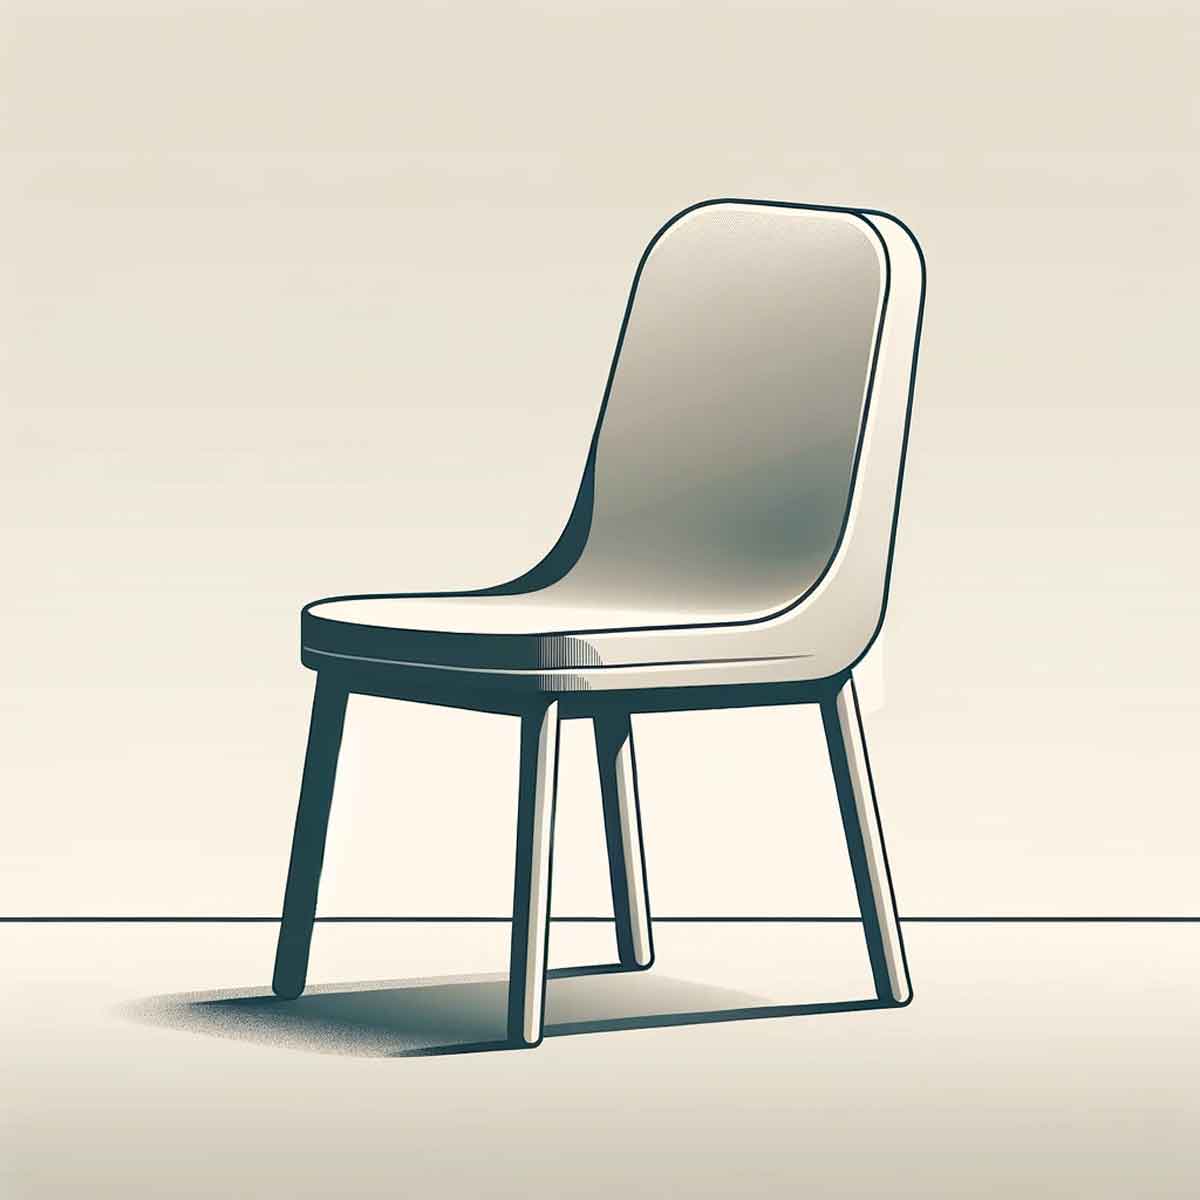 La técnica de la silla vacía es característica de la Gestalt.